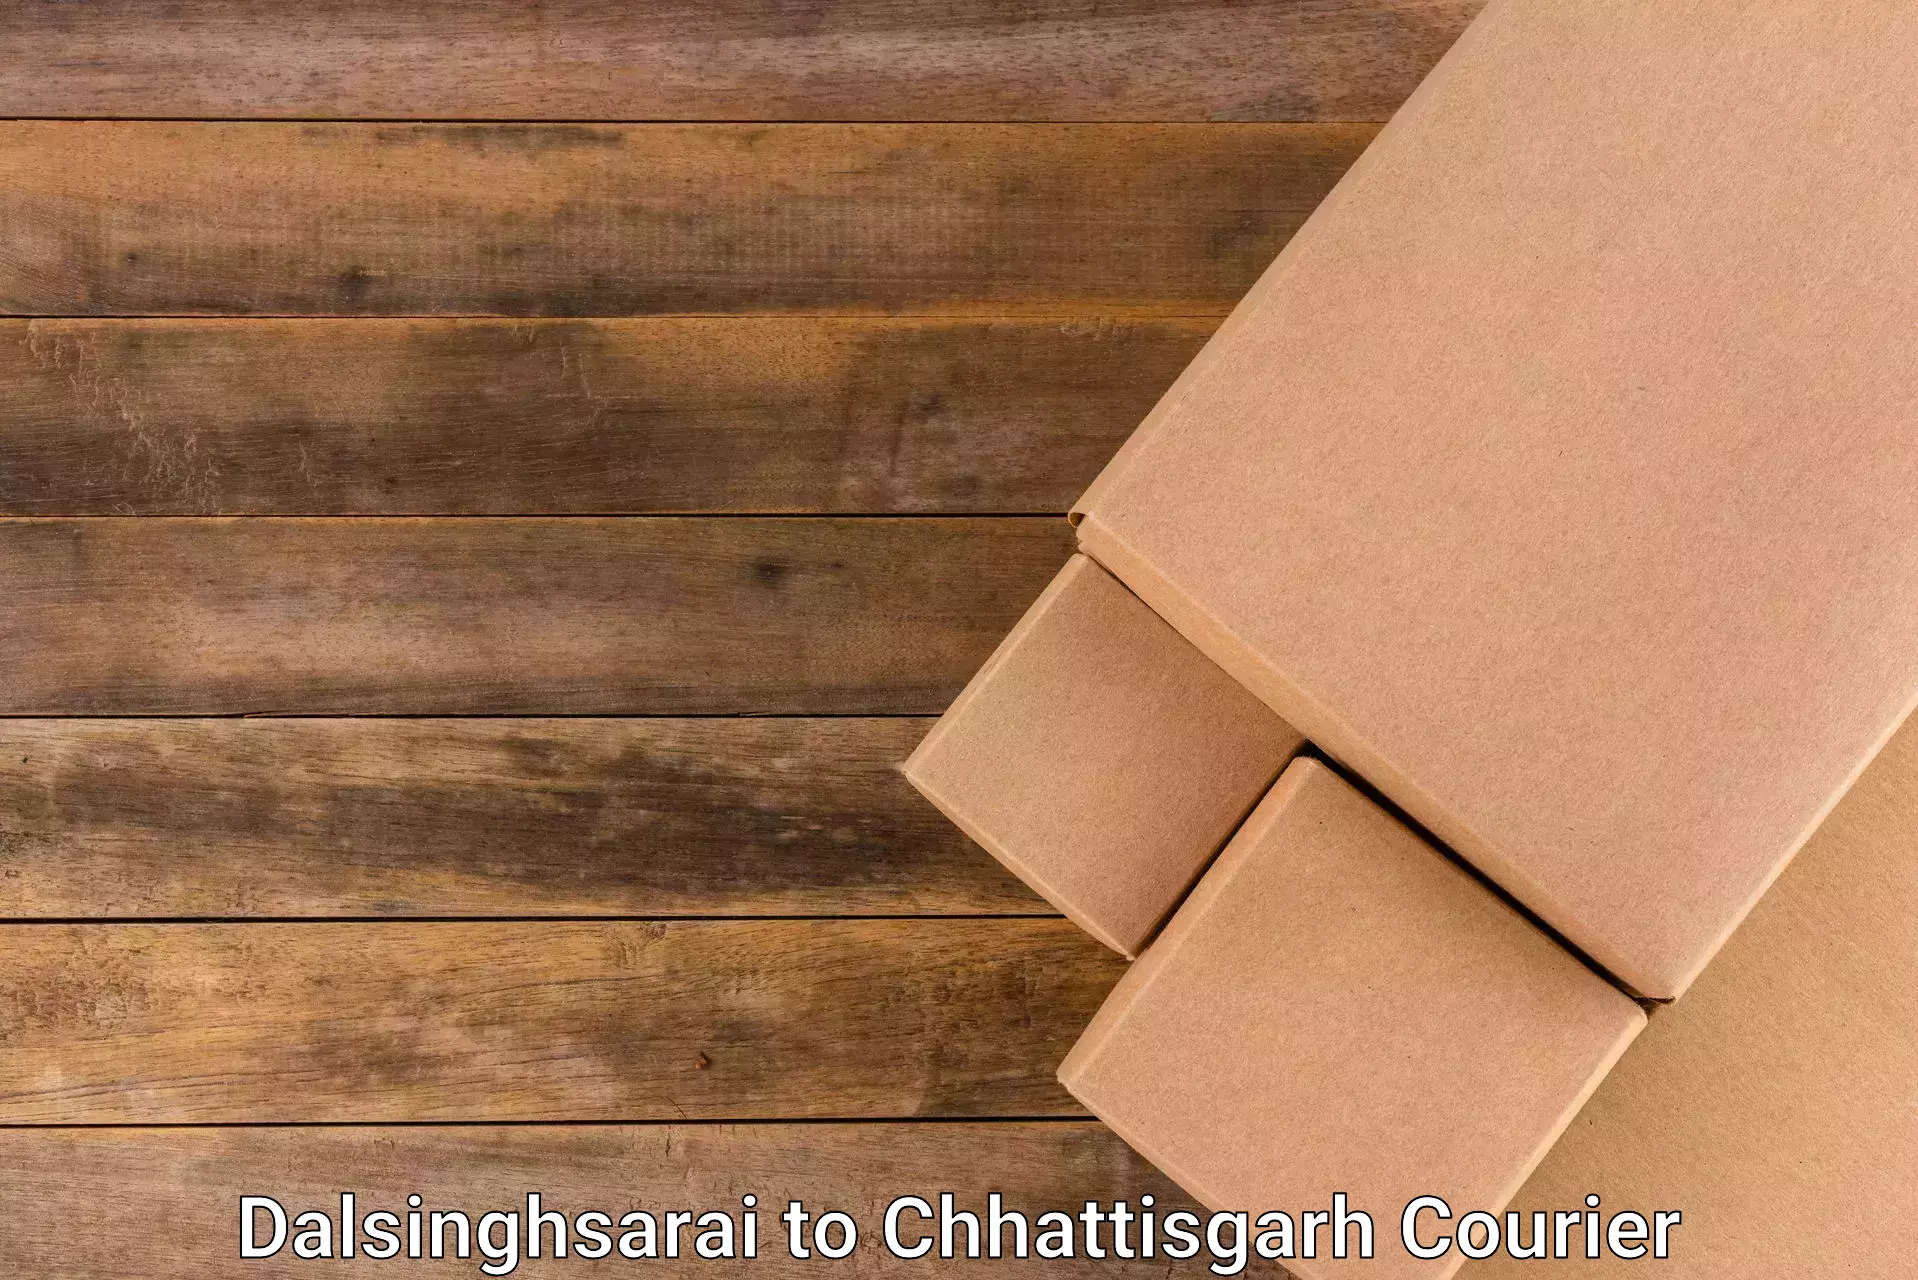 Multi-national courier services Dalsinghsarai to Bijapur Chhattisgarh